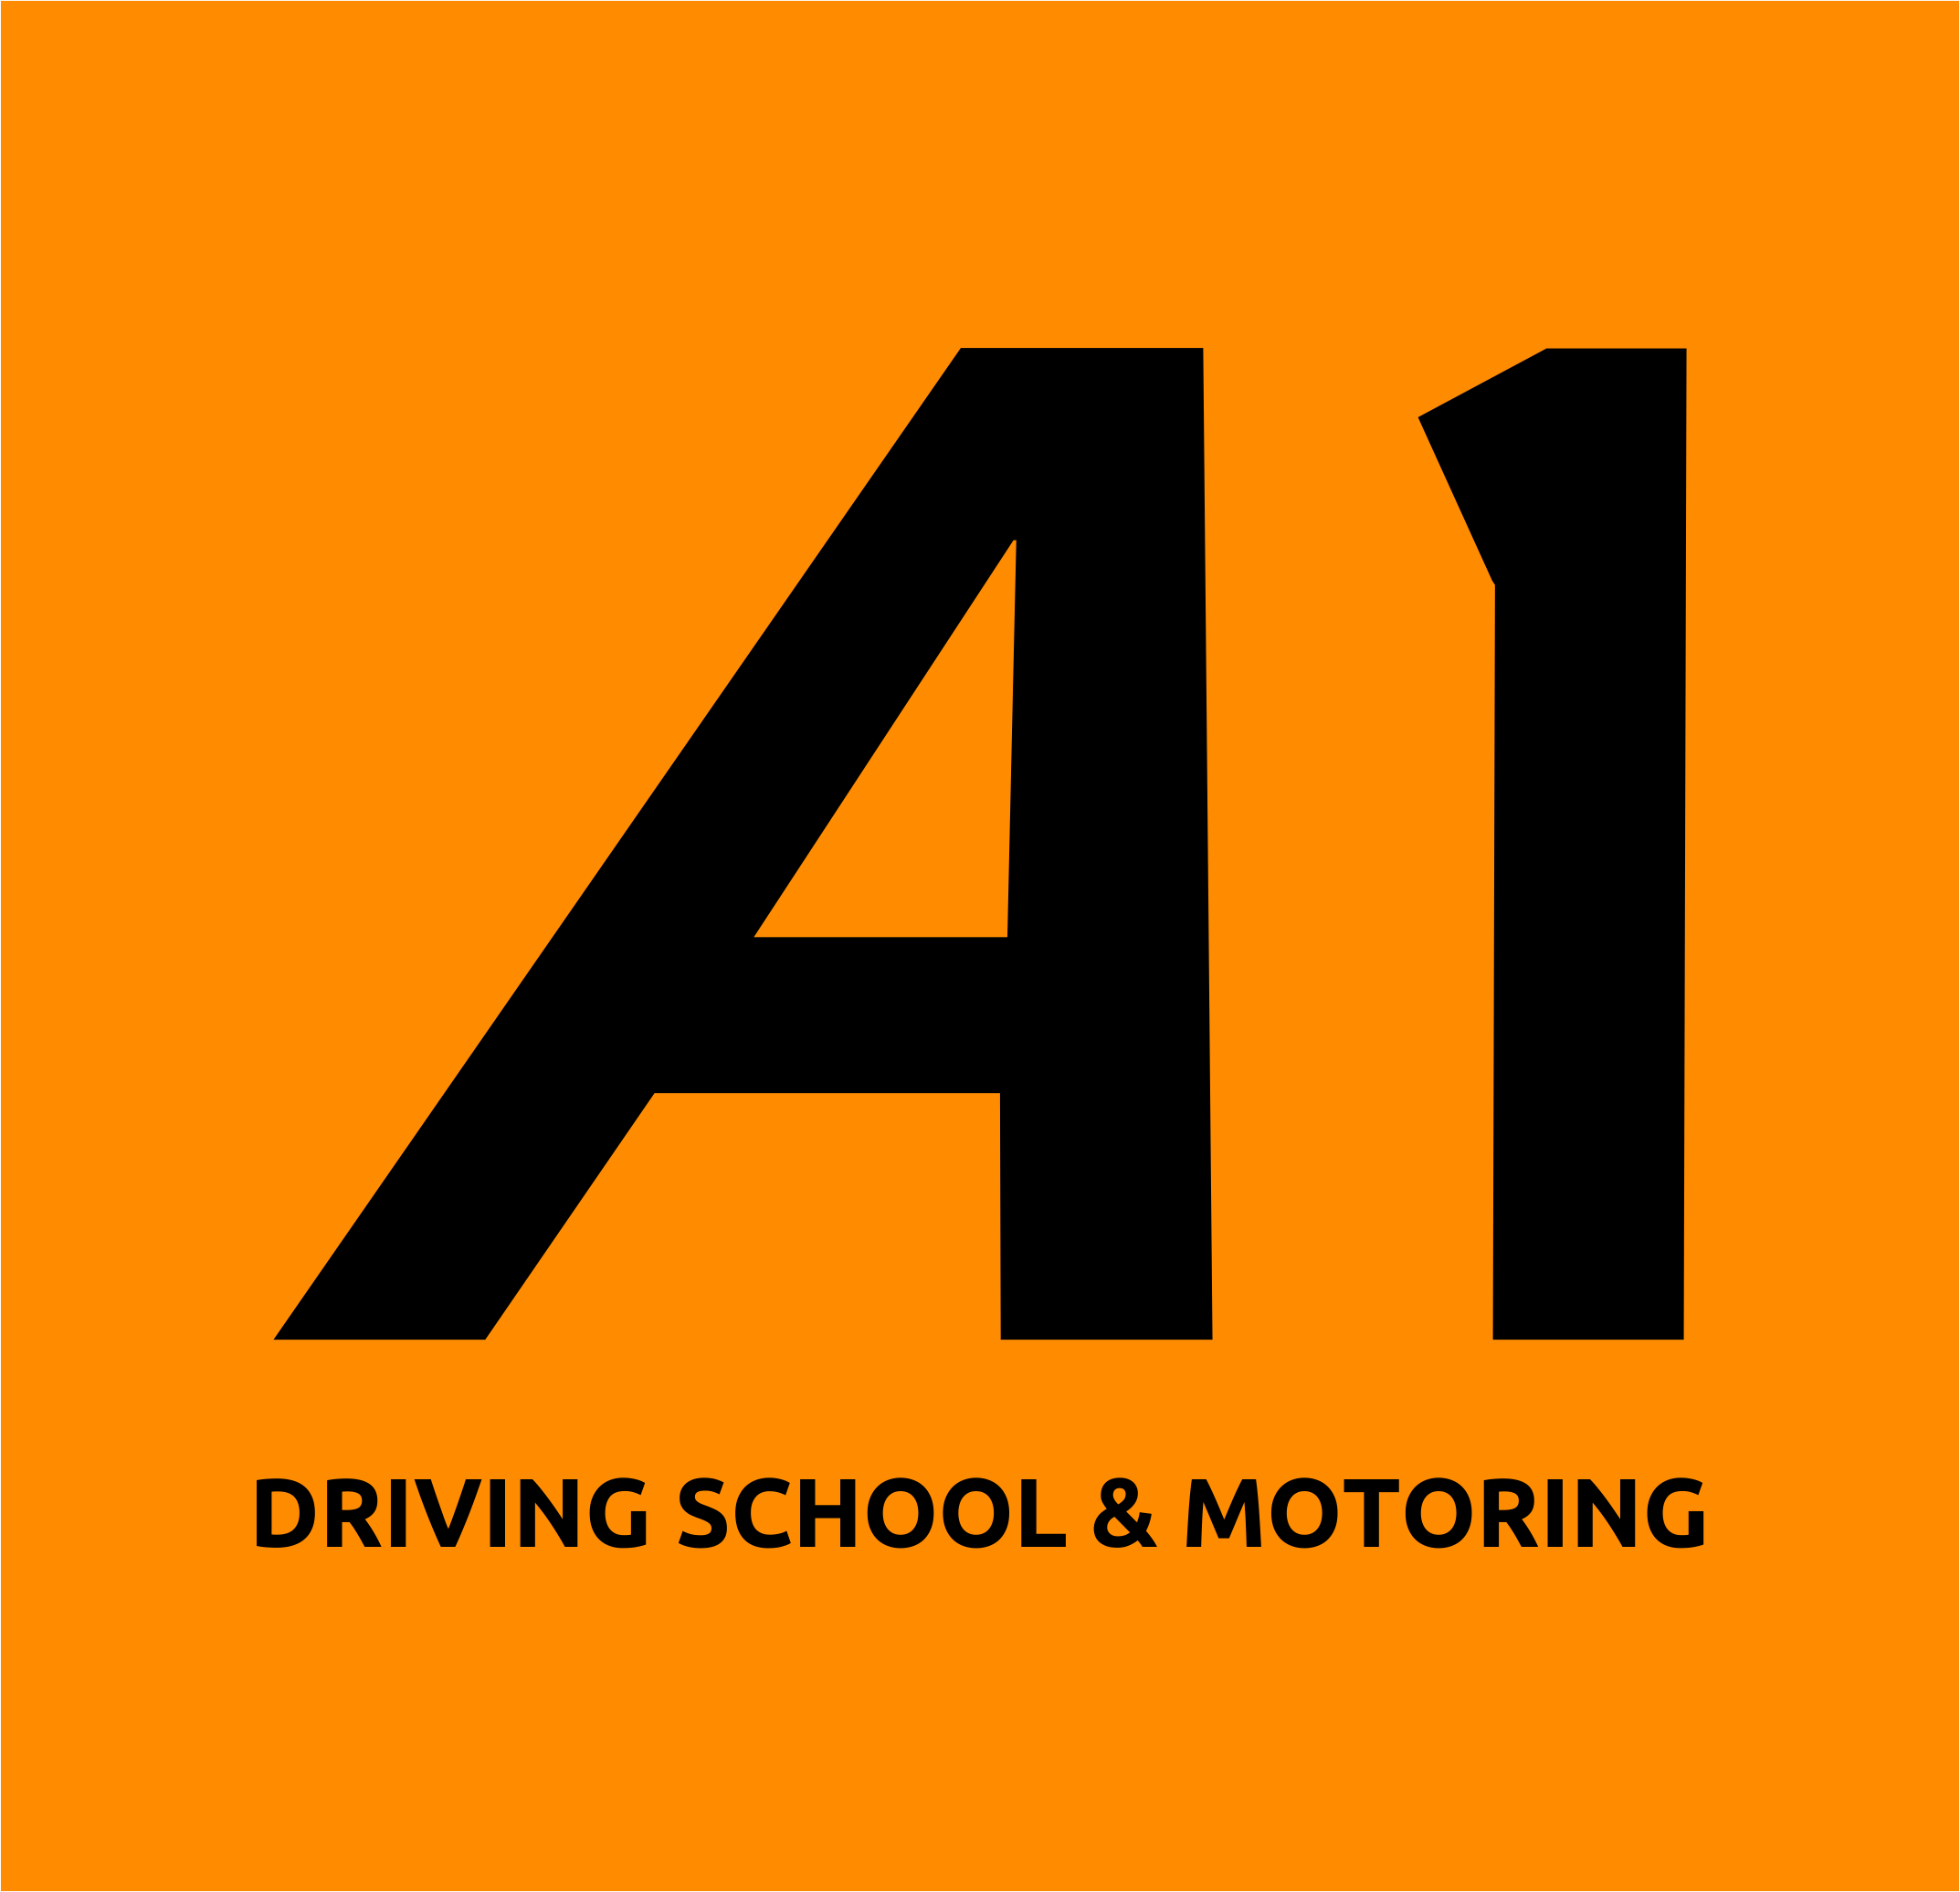 A1 Driving School, Lagos Nigeria - call 01-2910533